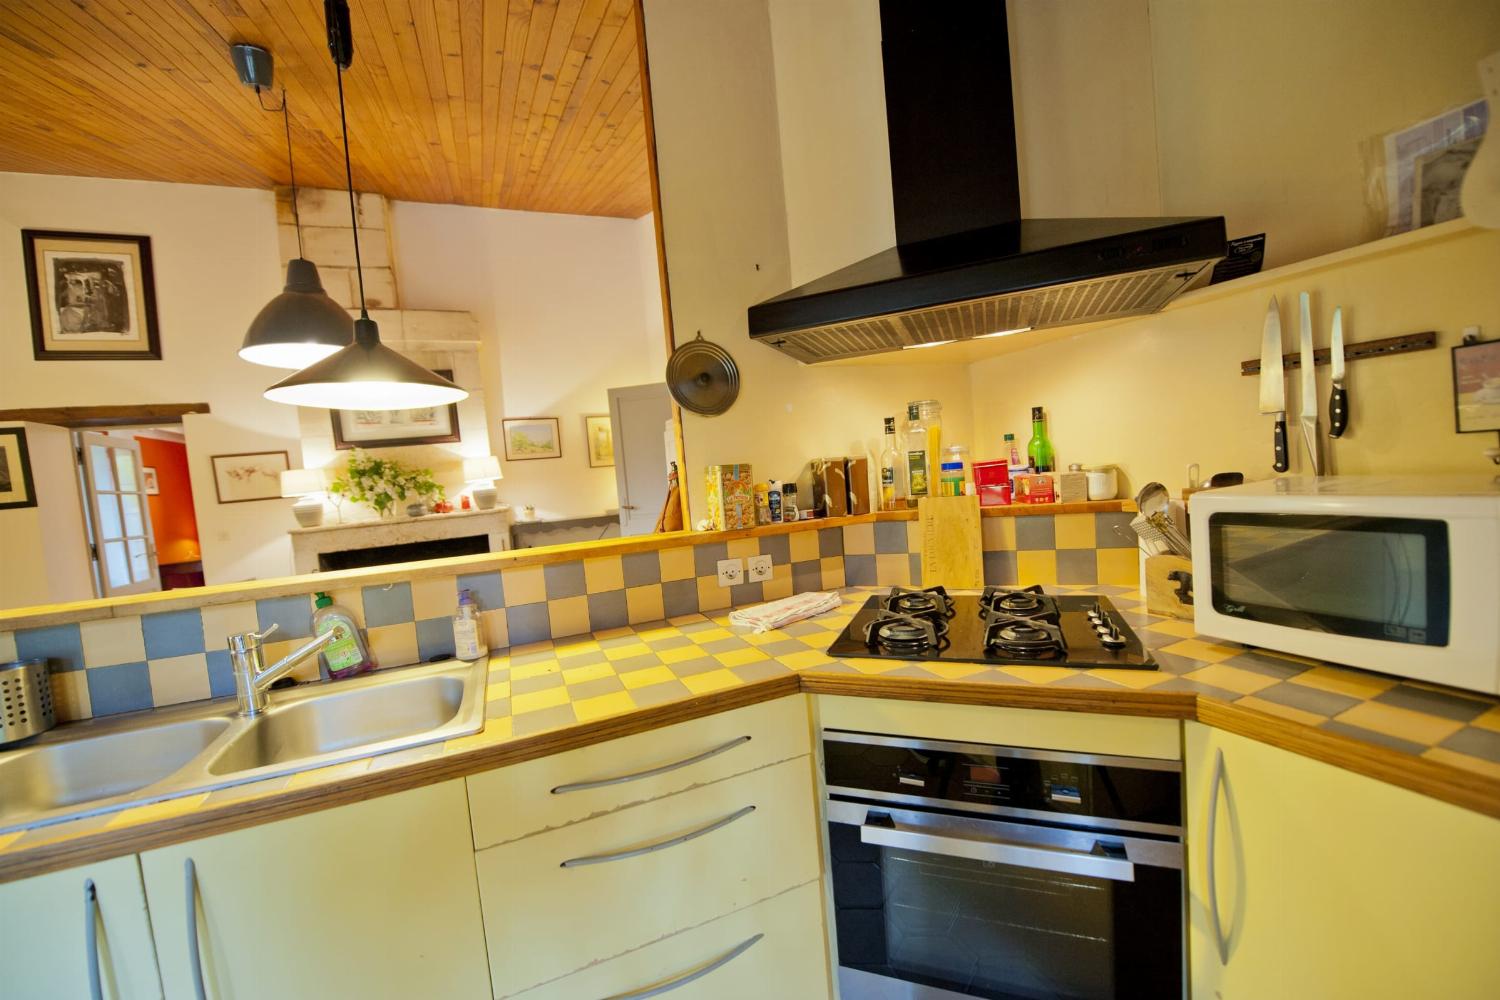 Kitchen | Rental home in Gironde